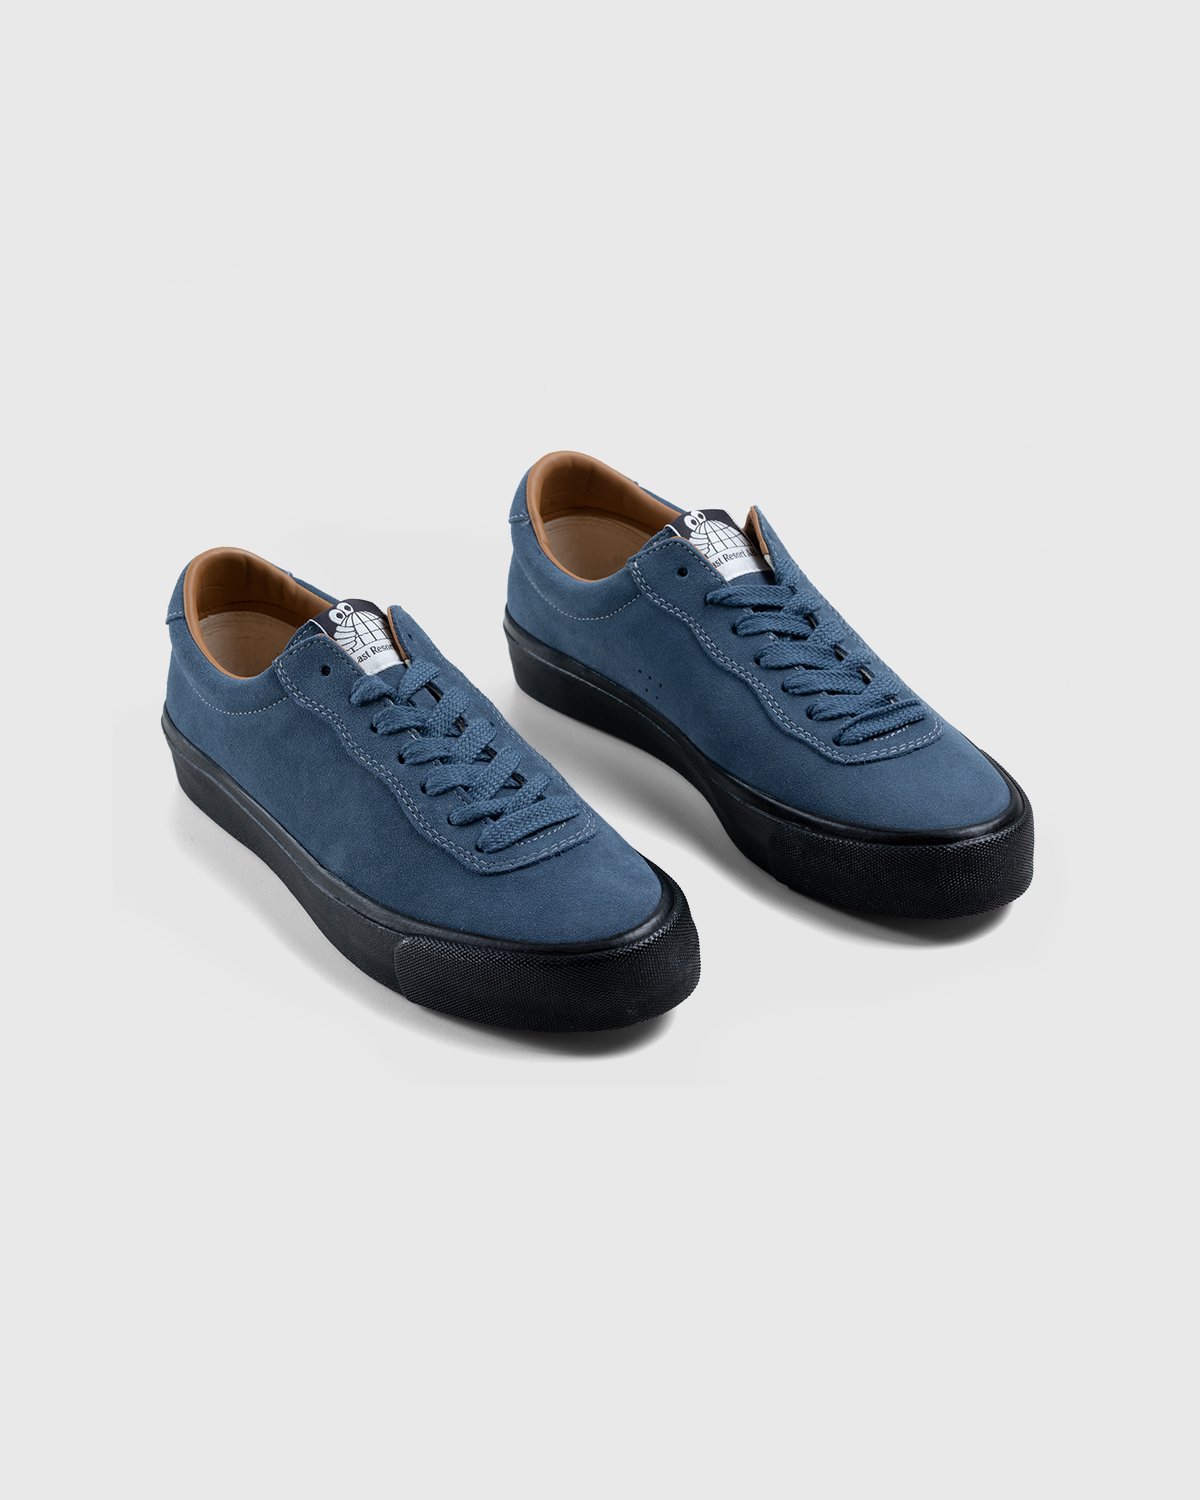 Last Resort AB - VM001 Suede Lo Blue/Black - Footwear - Blue - Image 3